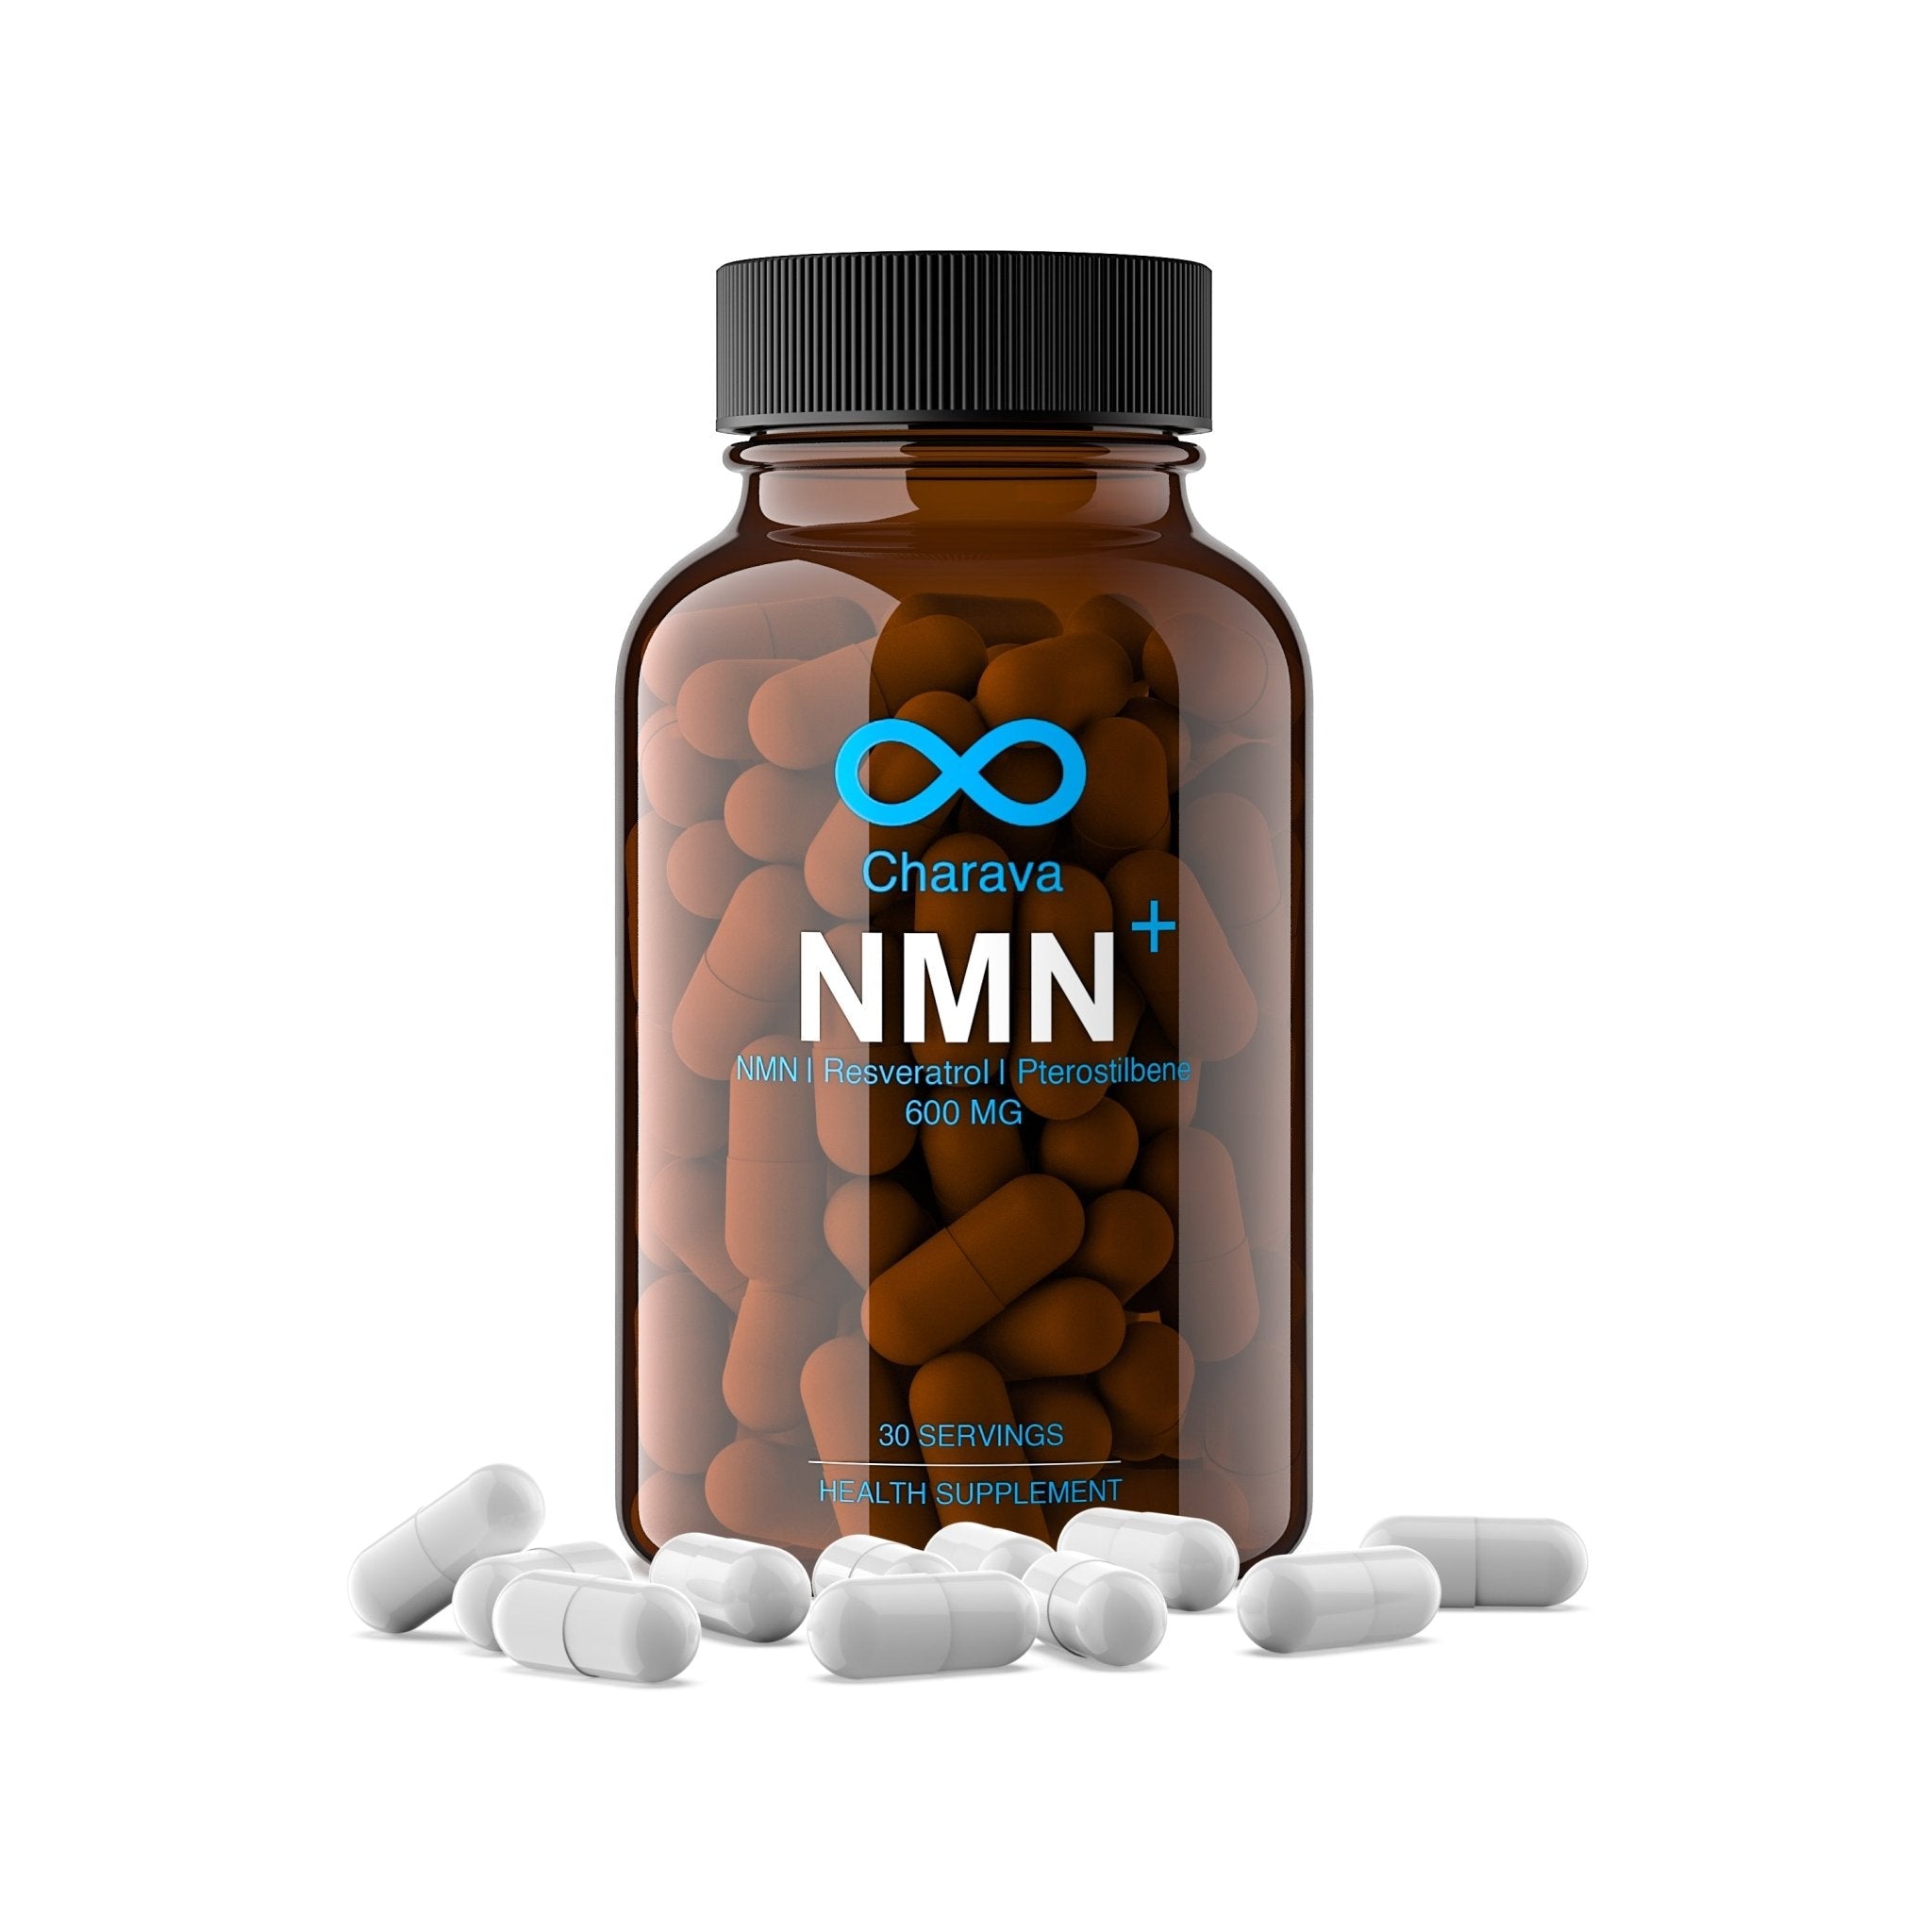 NMN+600 (NMN, Resveratrol, Pterostilbene) - Charava UK